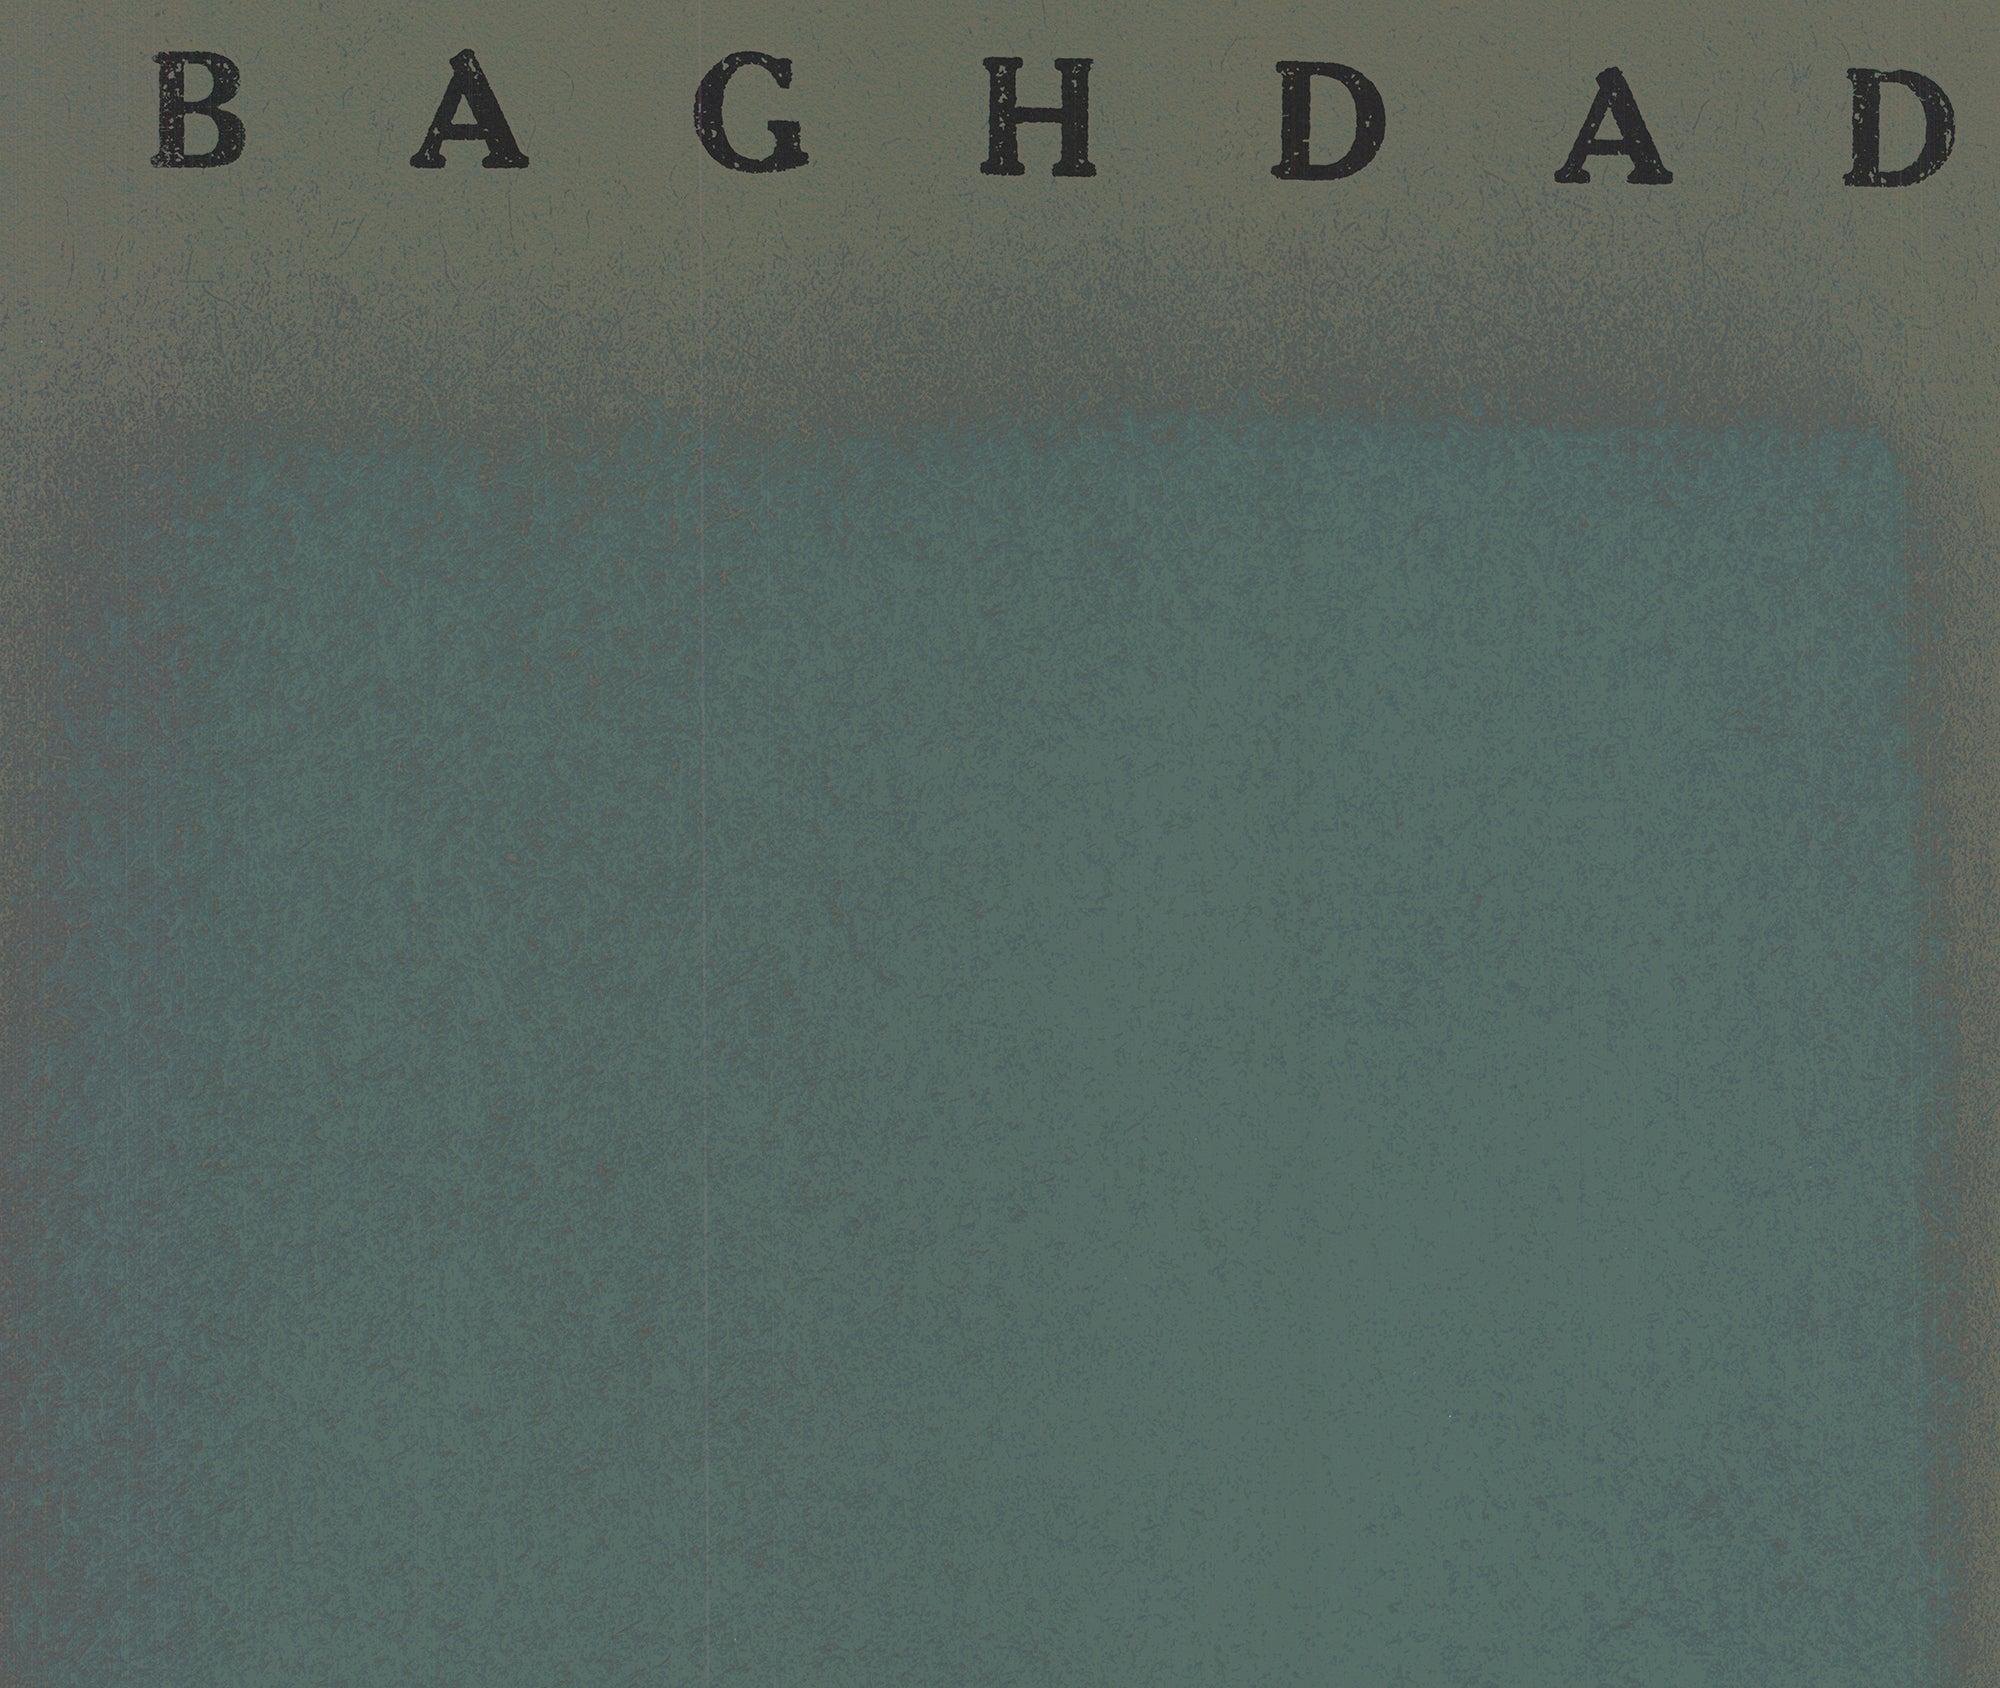 1972 I. B. Kitaj 'Baghdad' signé à la main - Contemporain Print par R.B. Kitaj